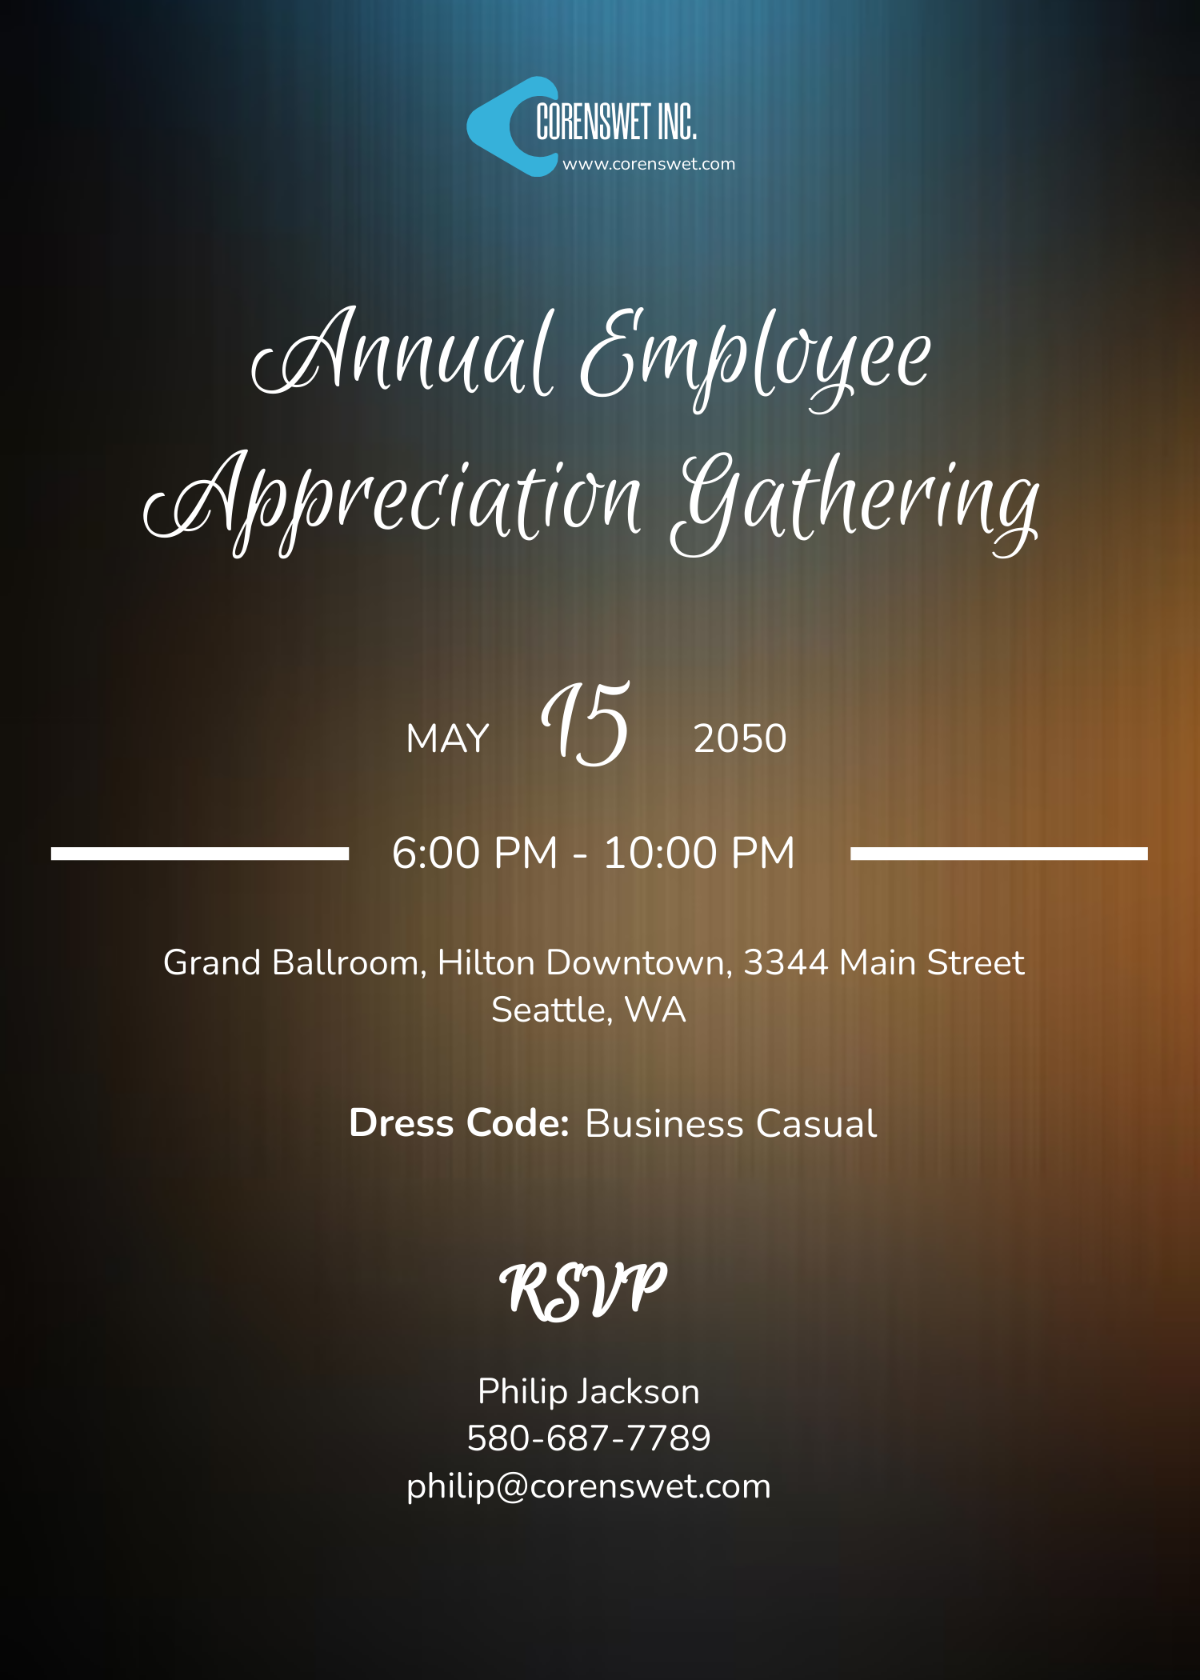 Company Employee Event Invitation